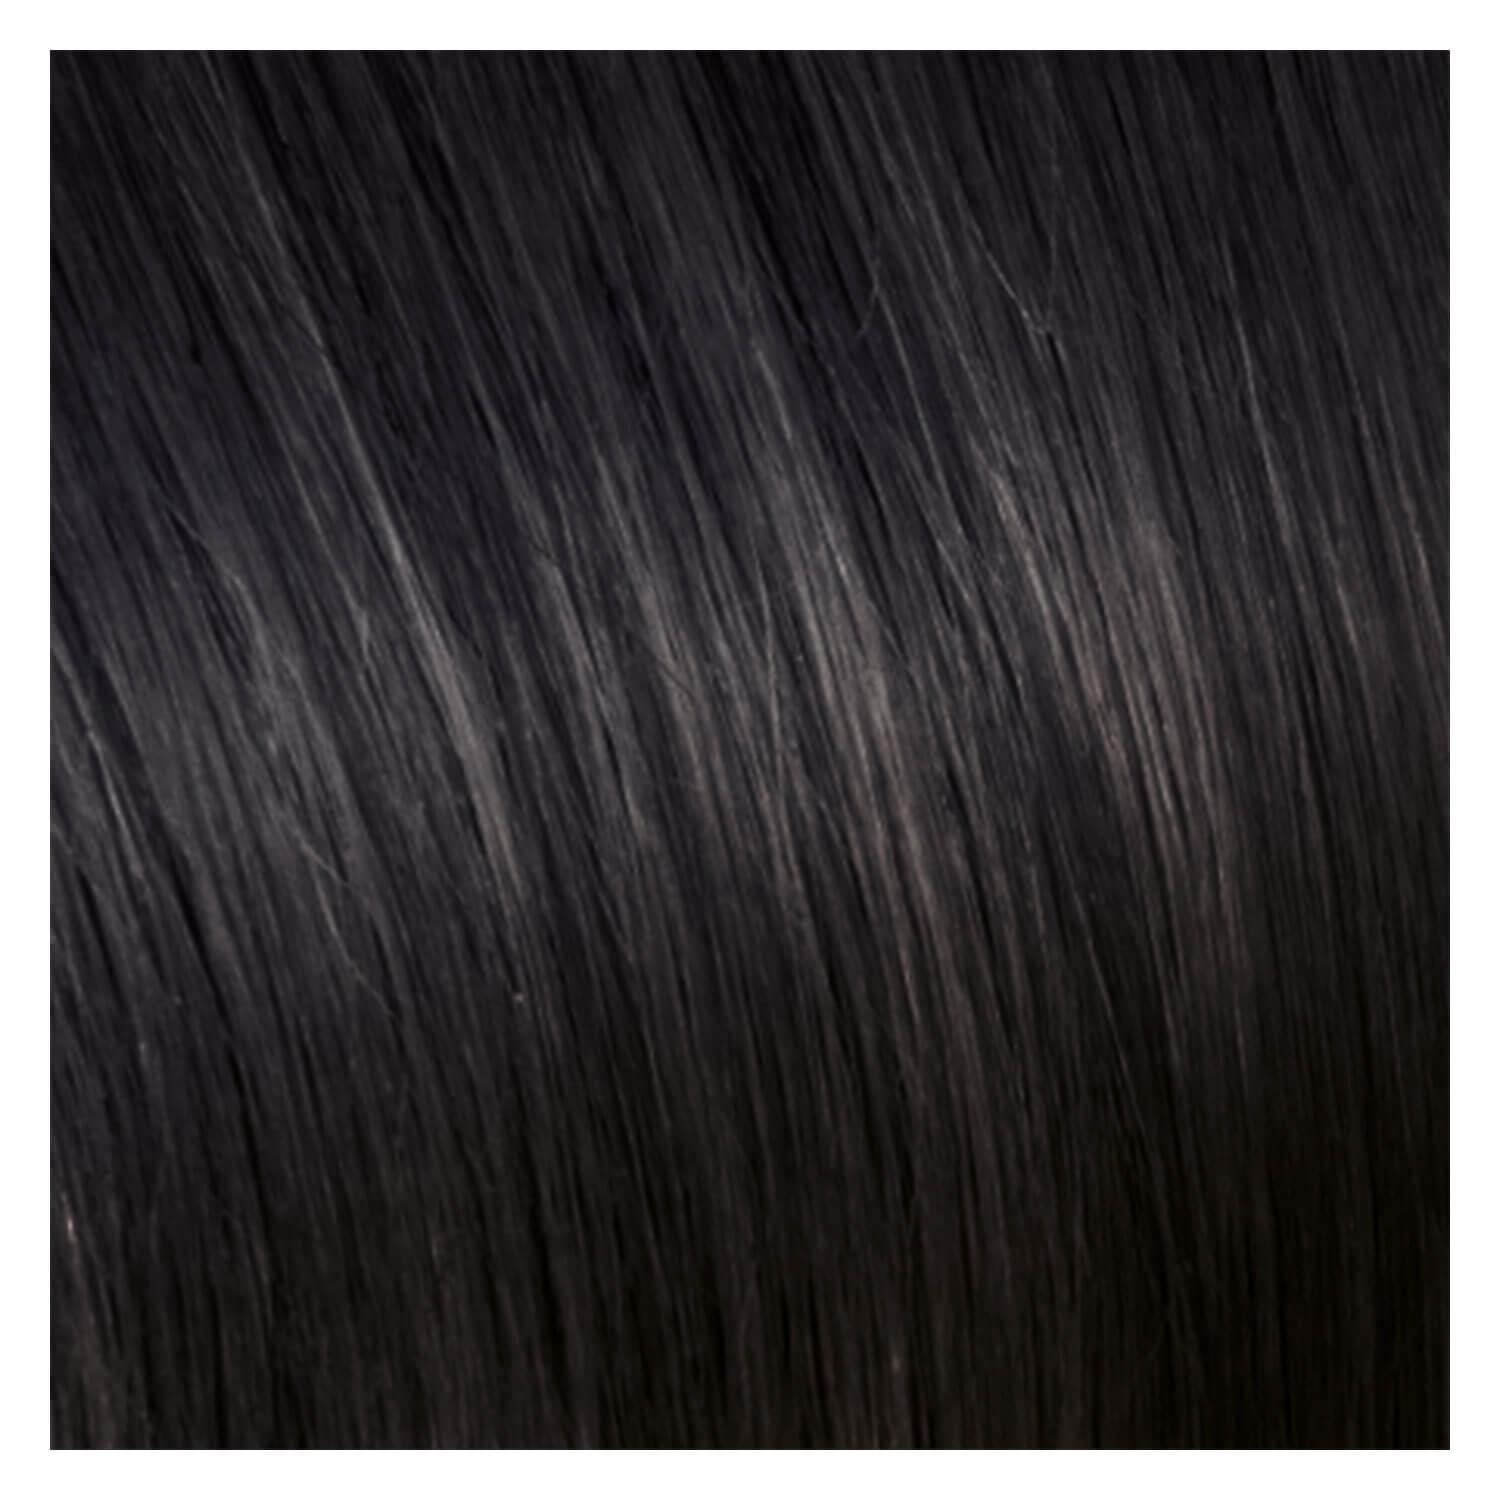 SHE Bonding-System Hair Extensions Straight - 1B Schwarz 55/60cm